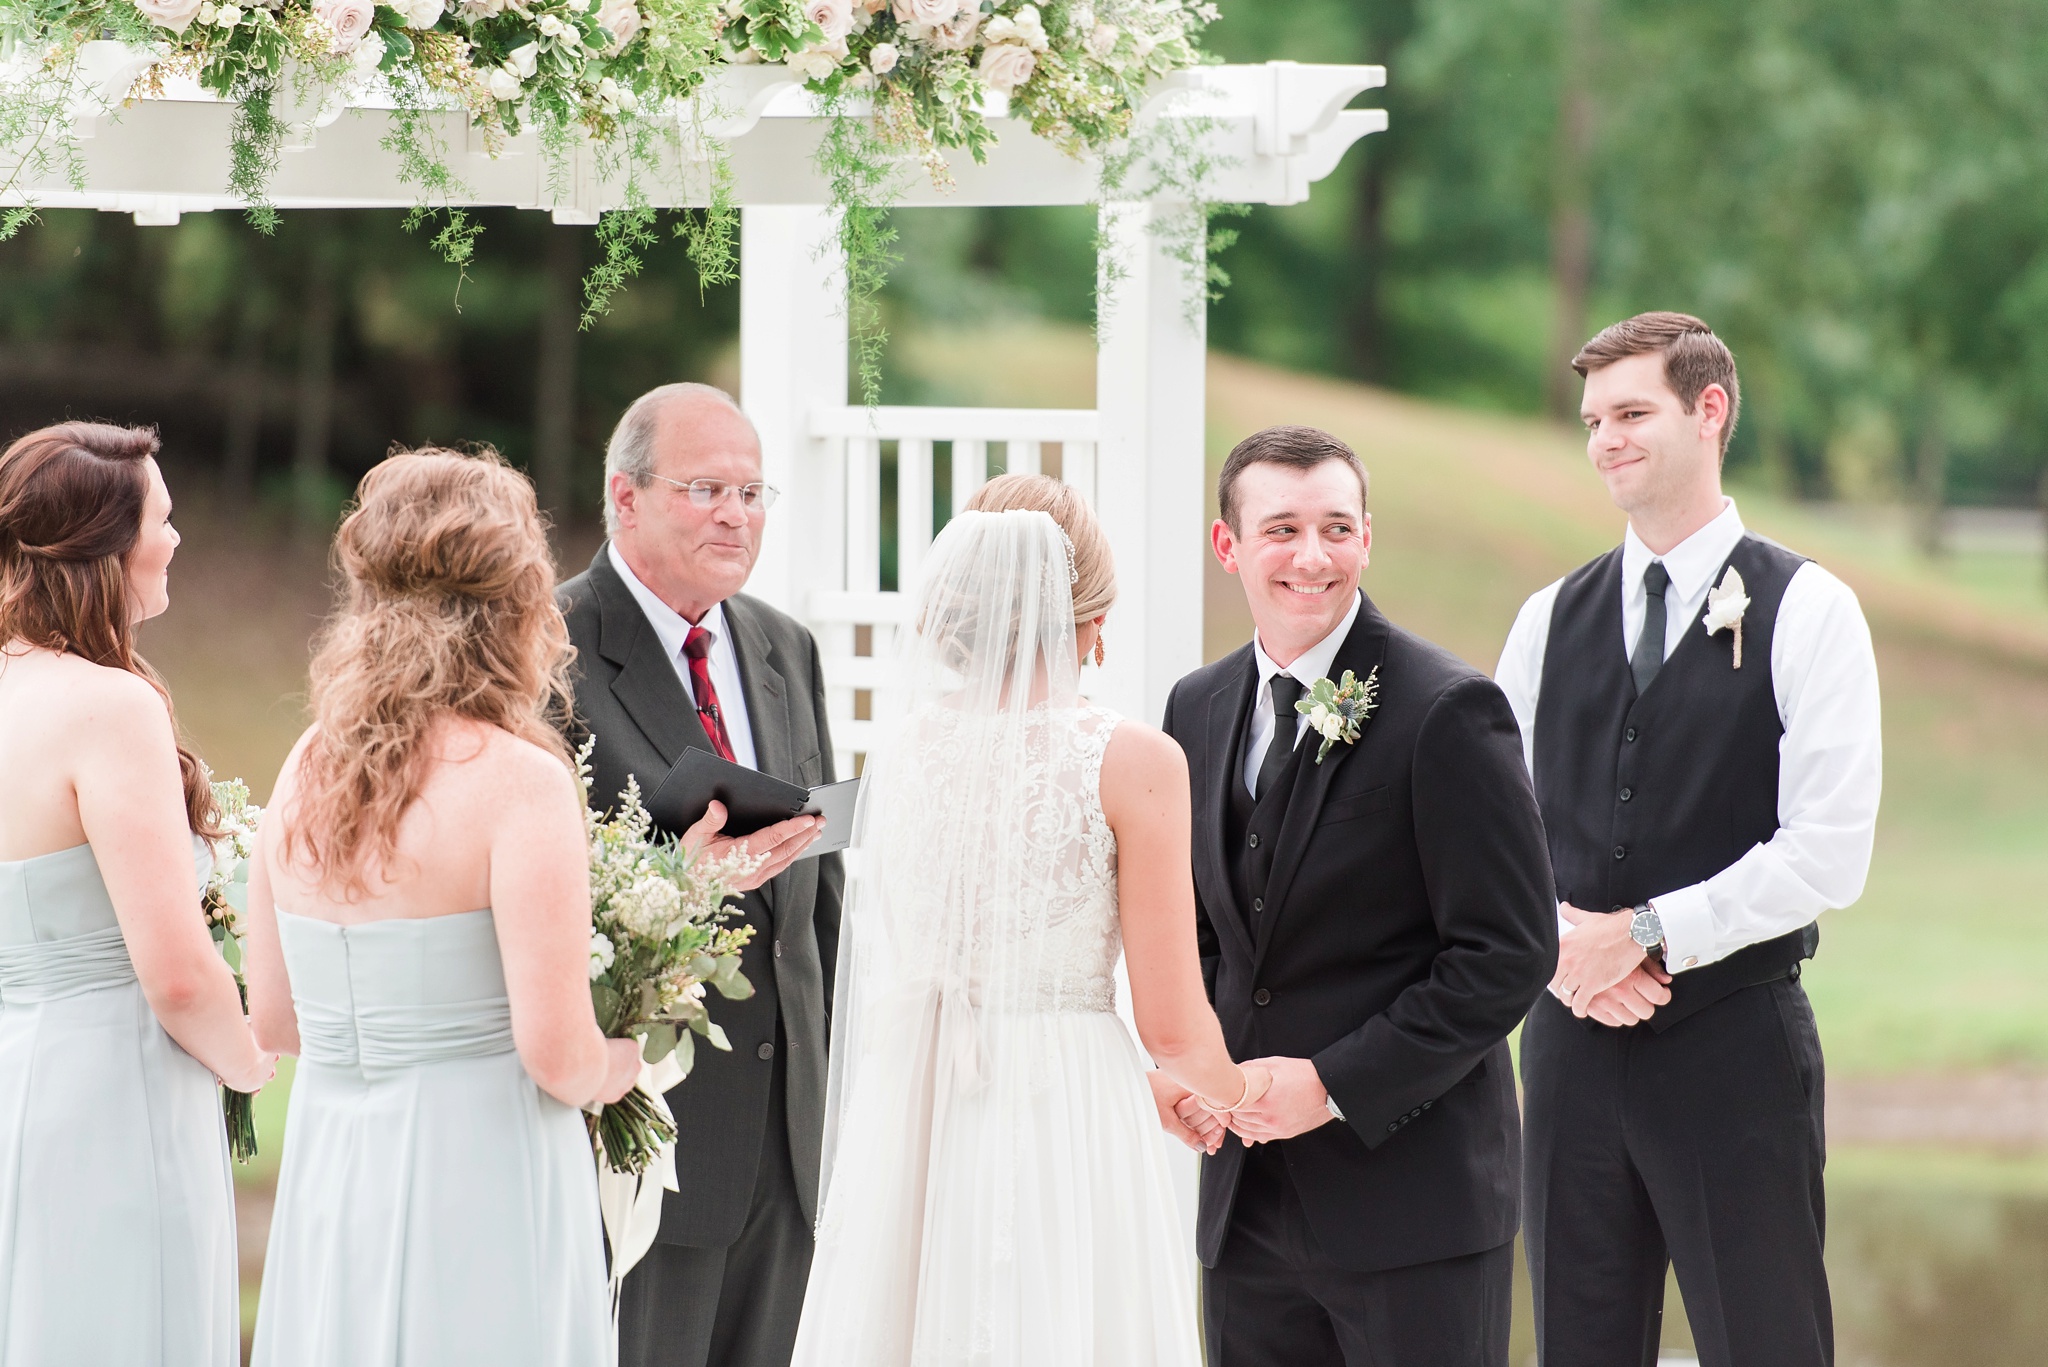 Gray and Black Classic Outdoor Wedding | Birmingham Alabama Wedding Photographers_0033.jpg